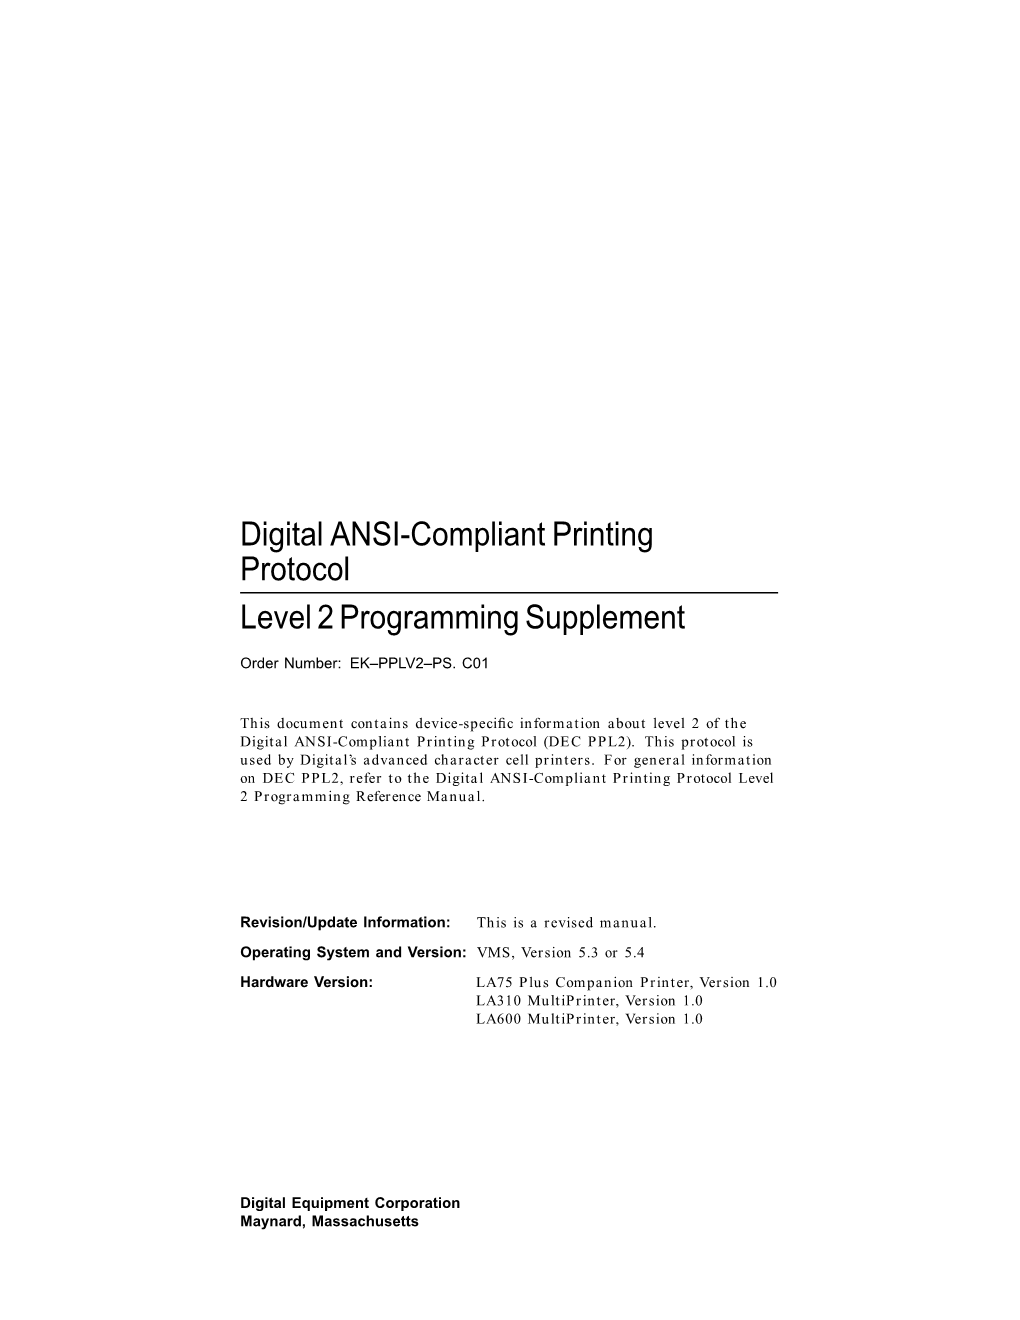 Digital Ansi-Compliant Printing Protocol Level 2 Program